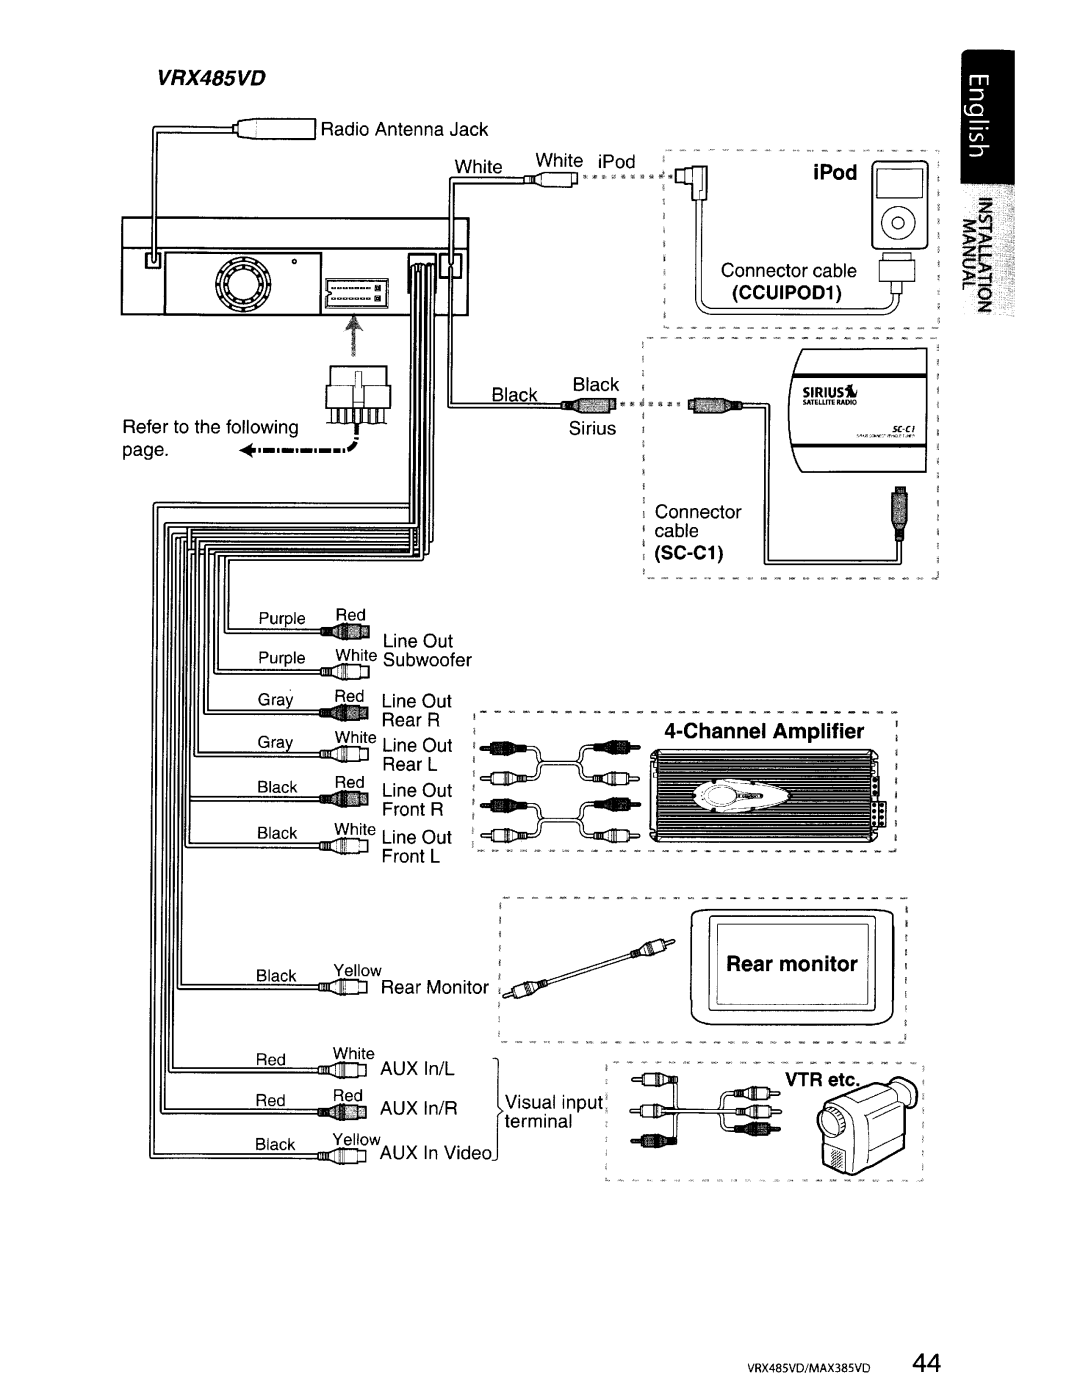 Clarion installation manual f ! III U, iPod, Rear monitor, VRX485VD/MAX385VD 